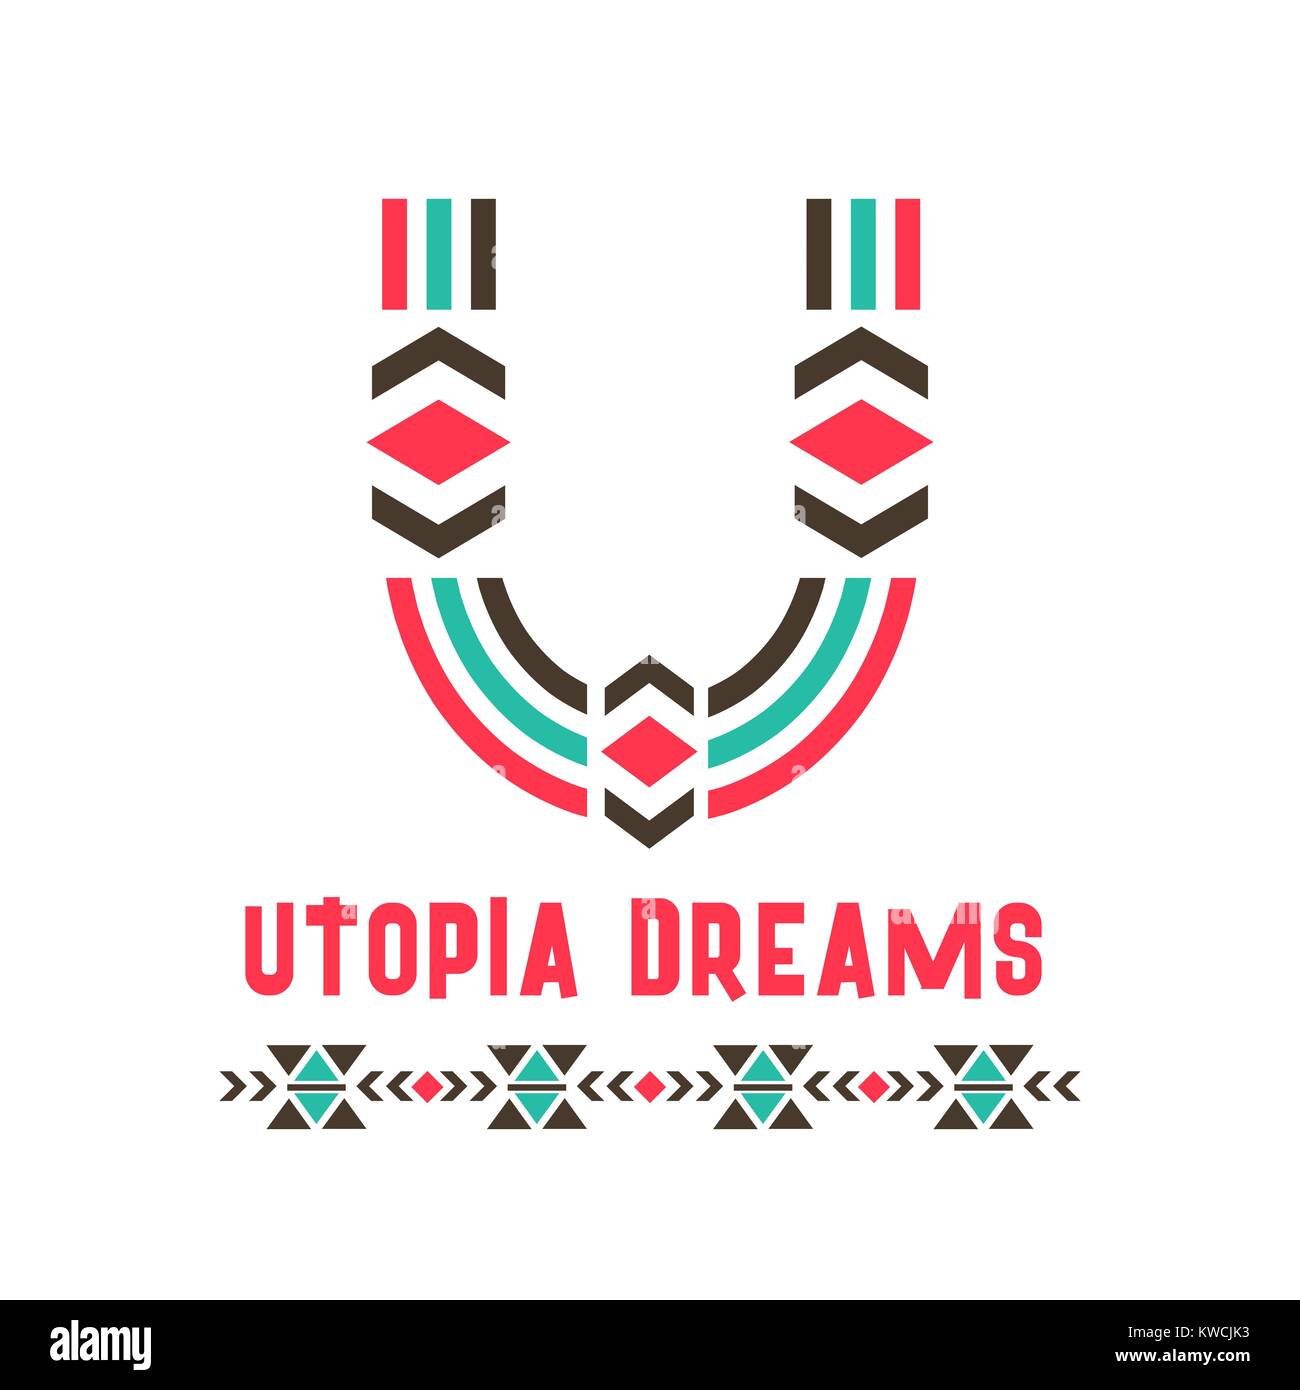 Utopia dreams logo Stock Vector